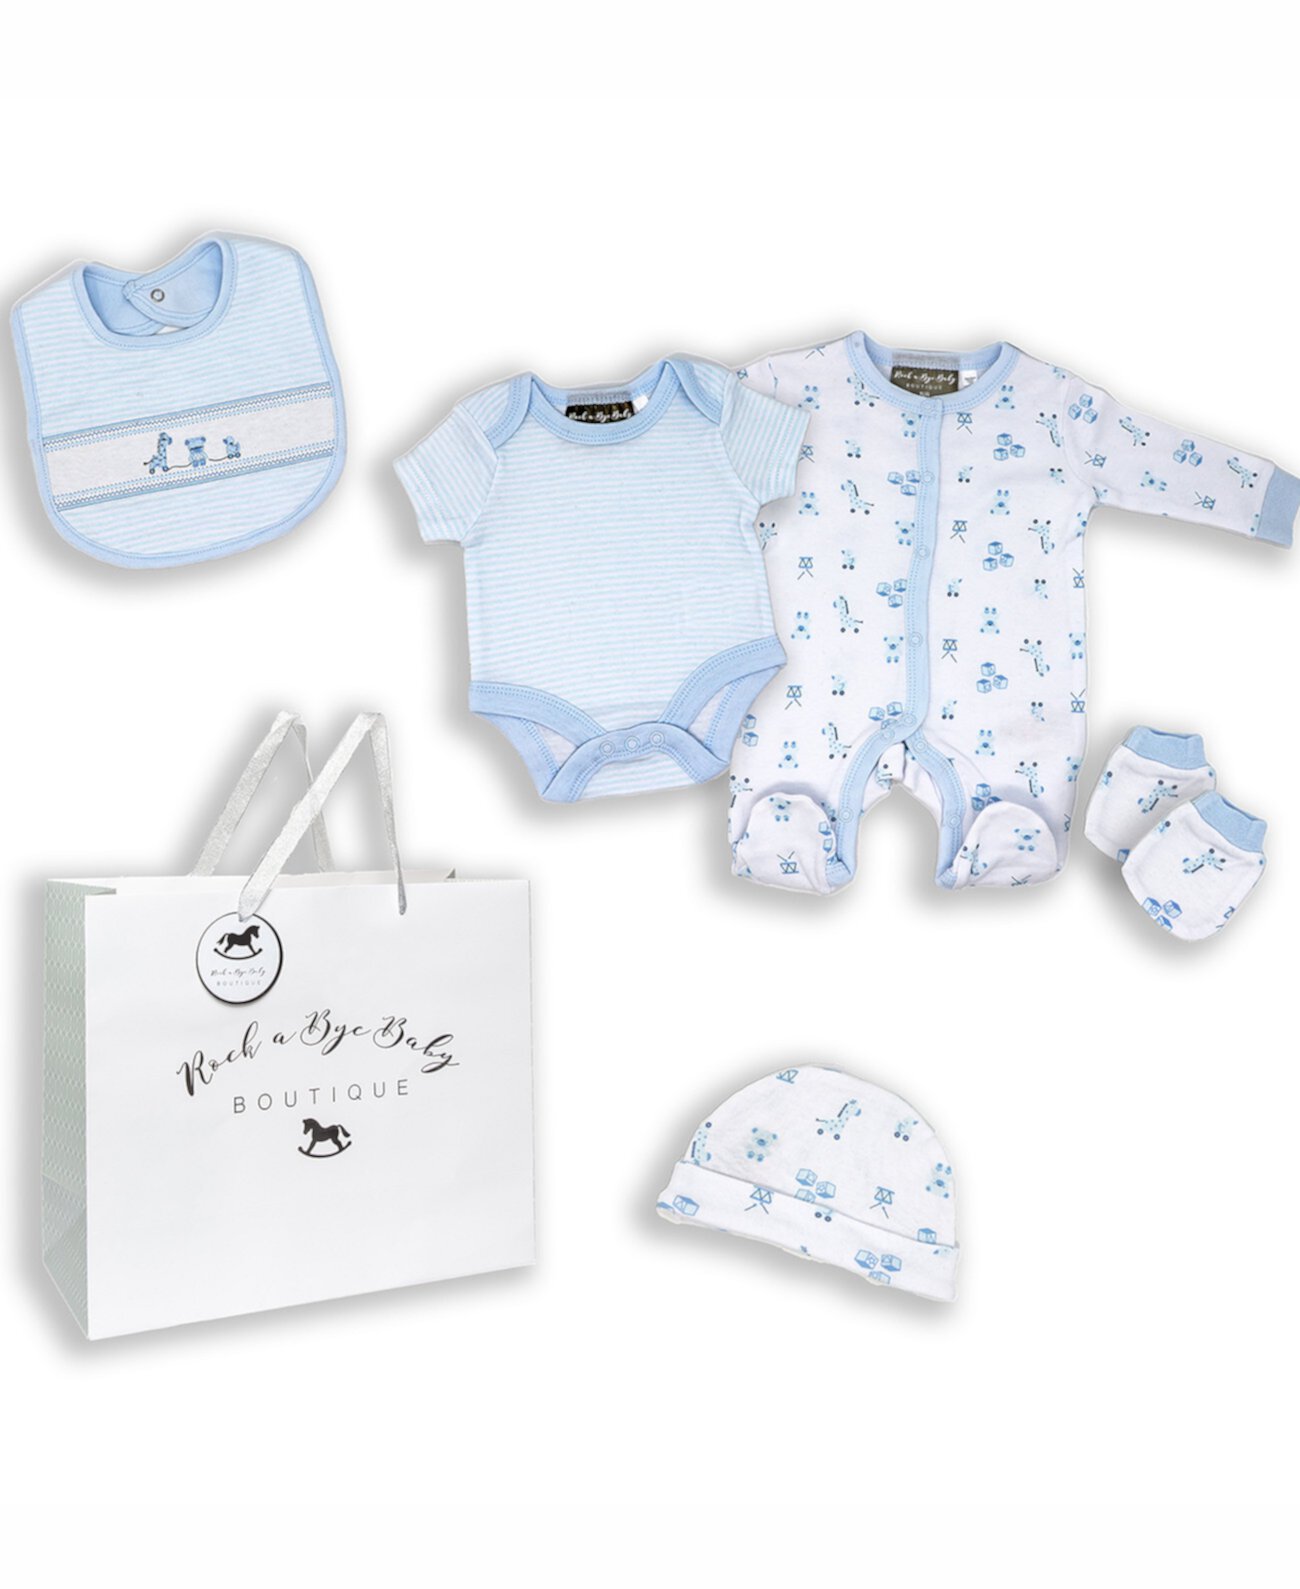 Baby Boys Toys Layette Gift в сетчатом мешке, набор из 5 предметов Rock-A-Bye Baby Boutique